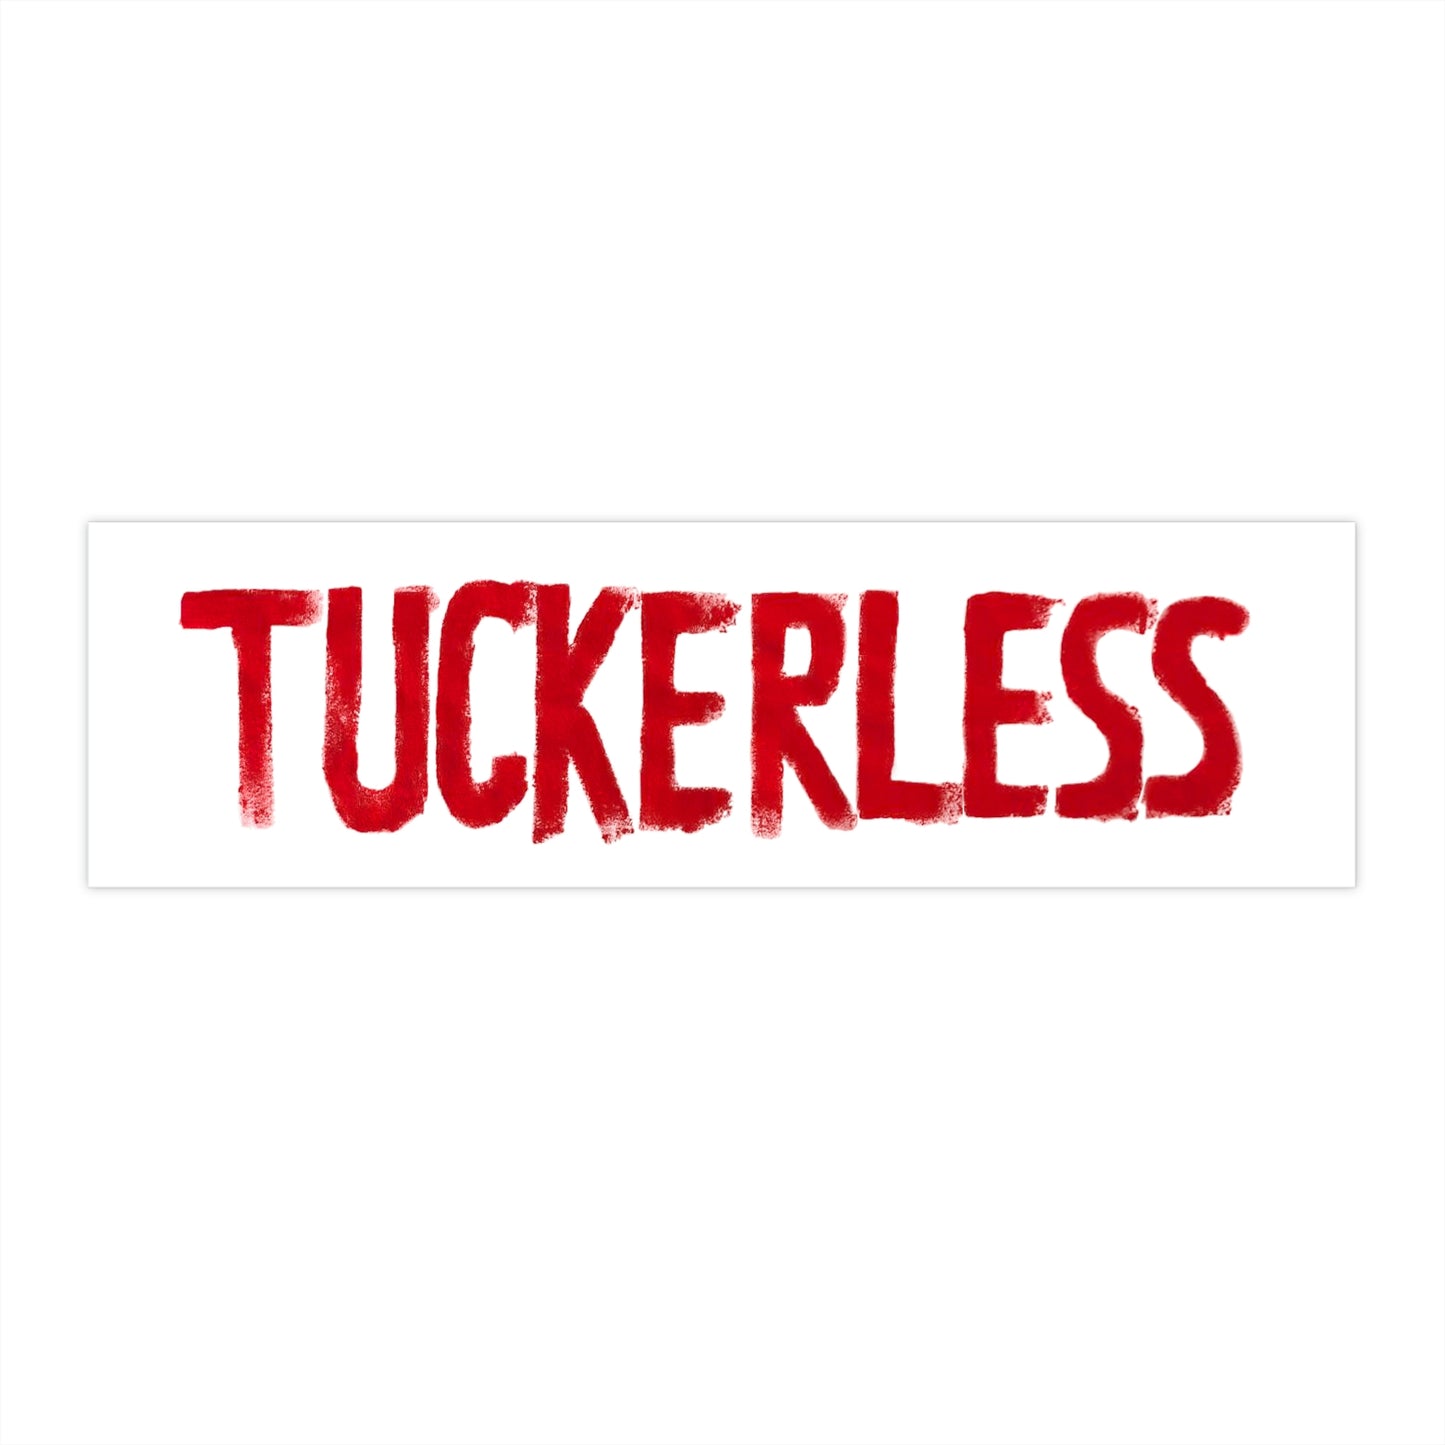 "Tuckerless" Bumper Sticker